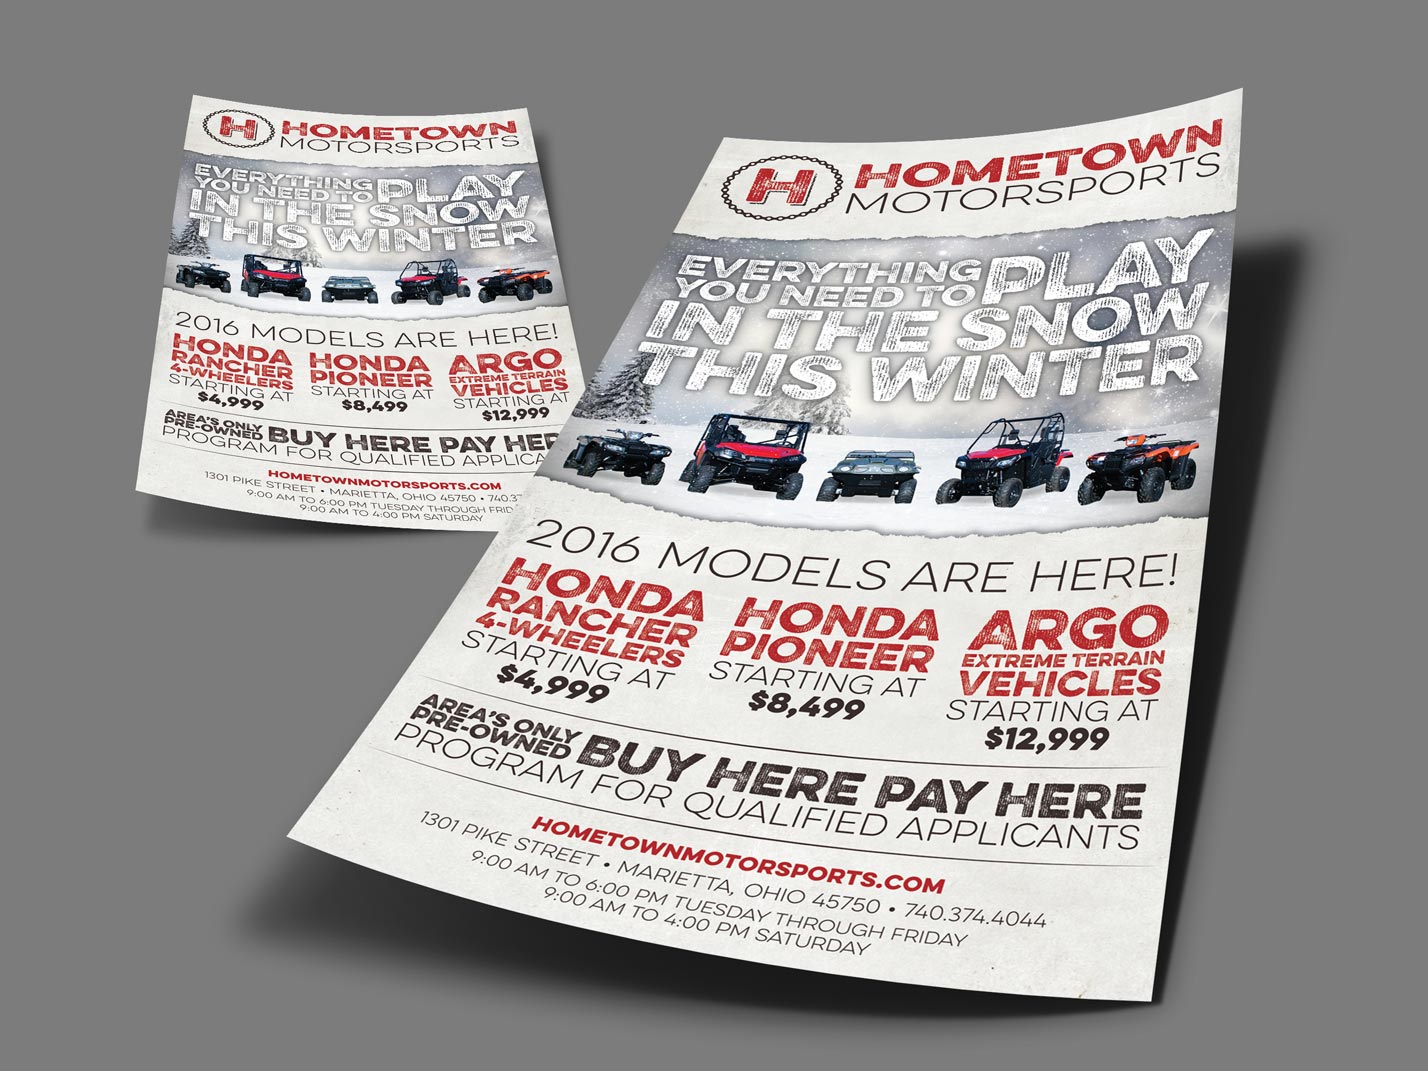 Hometown Motorsports Ads